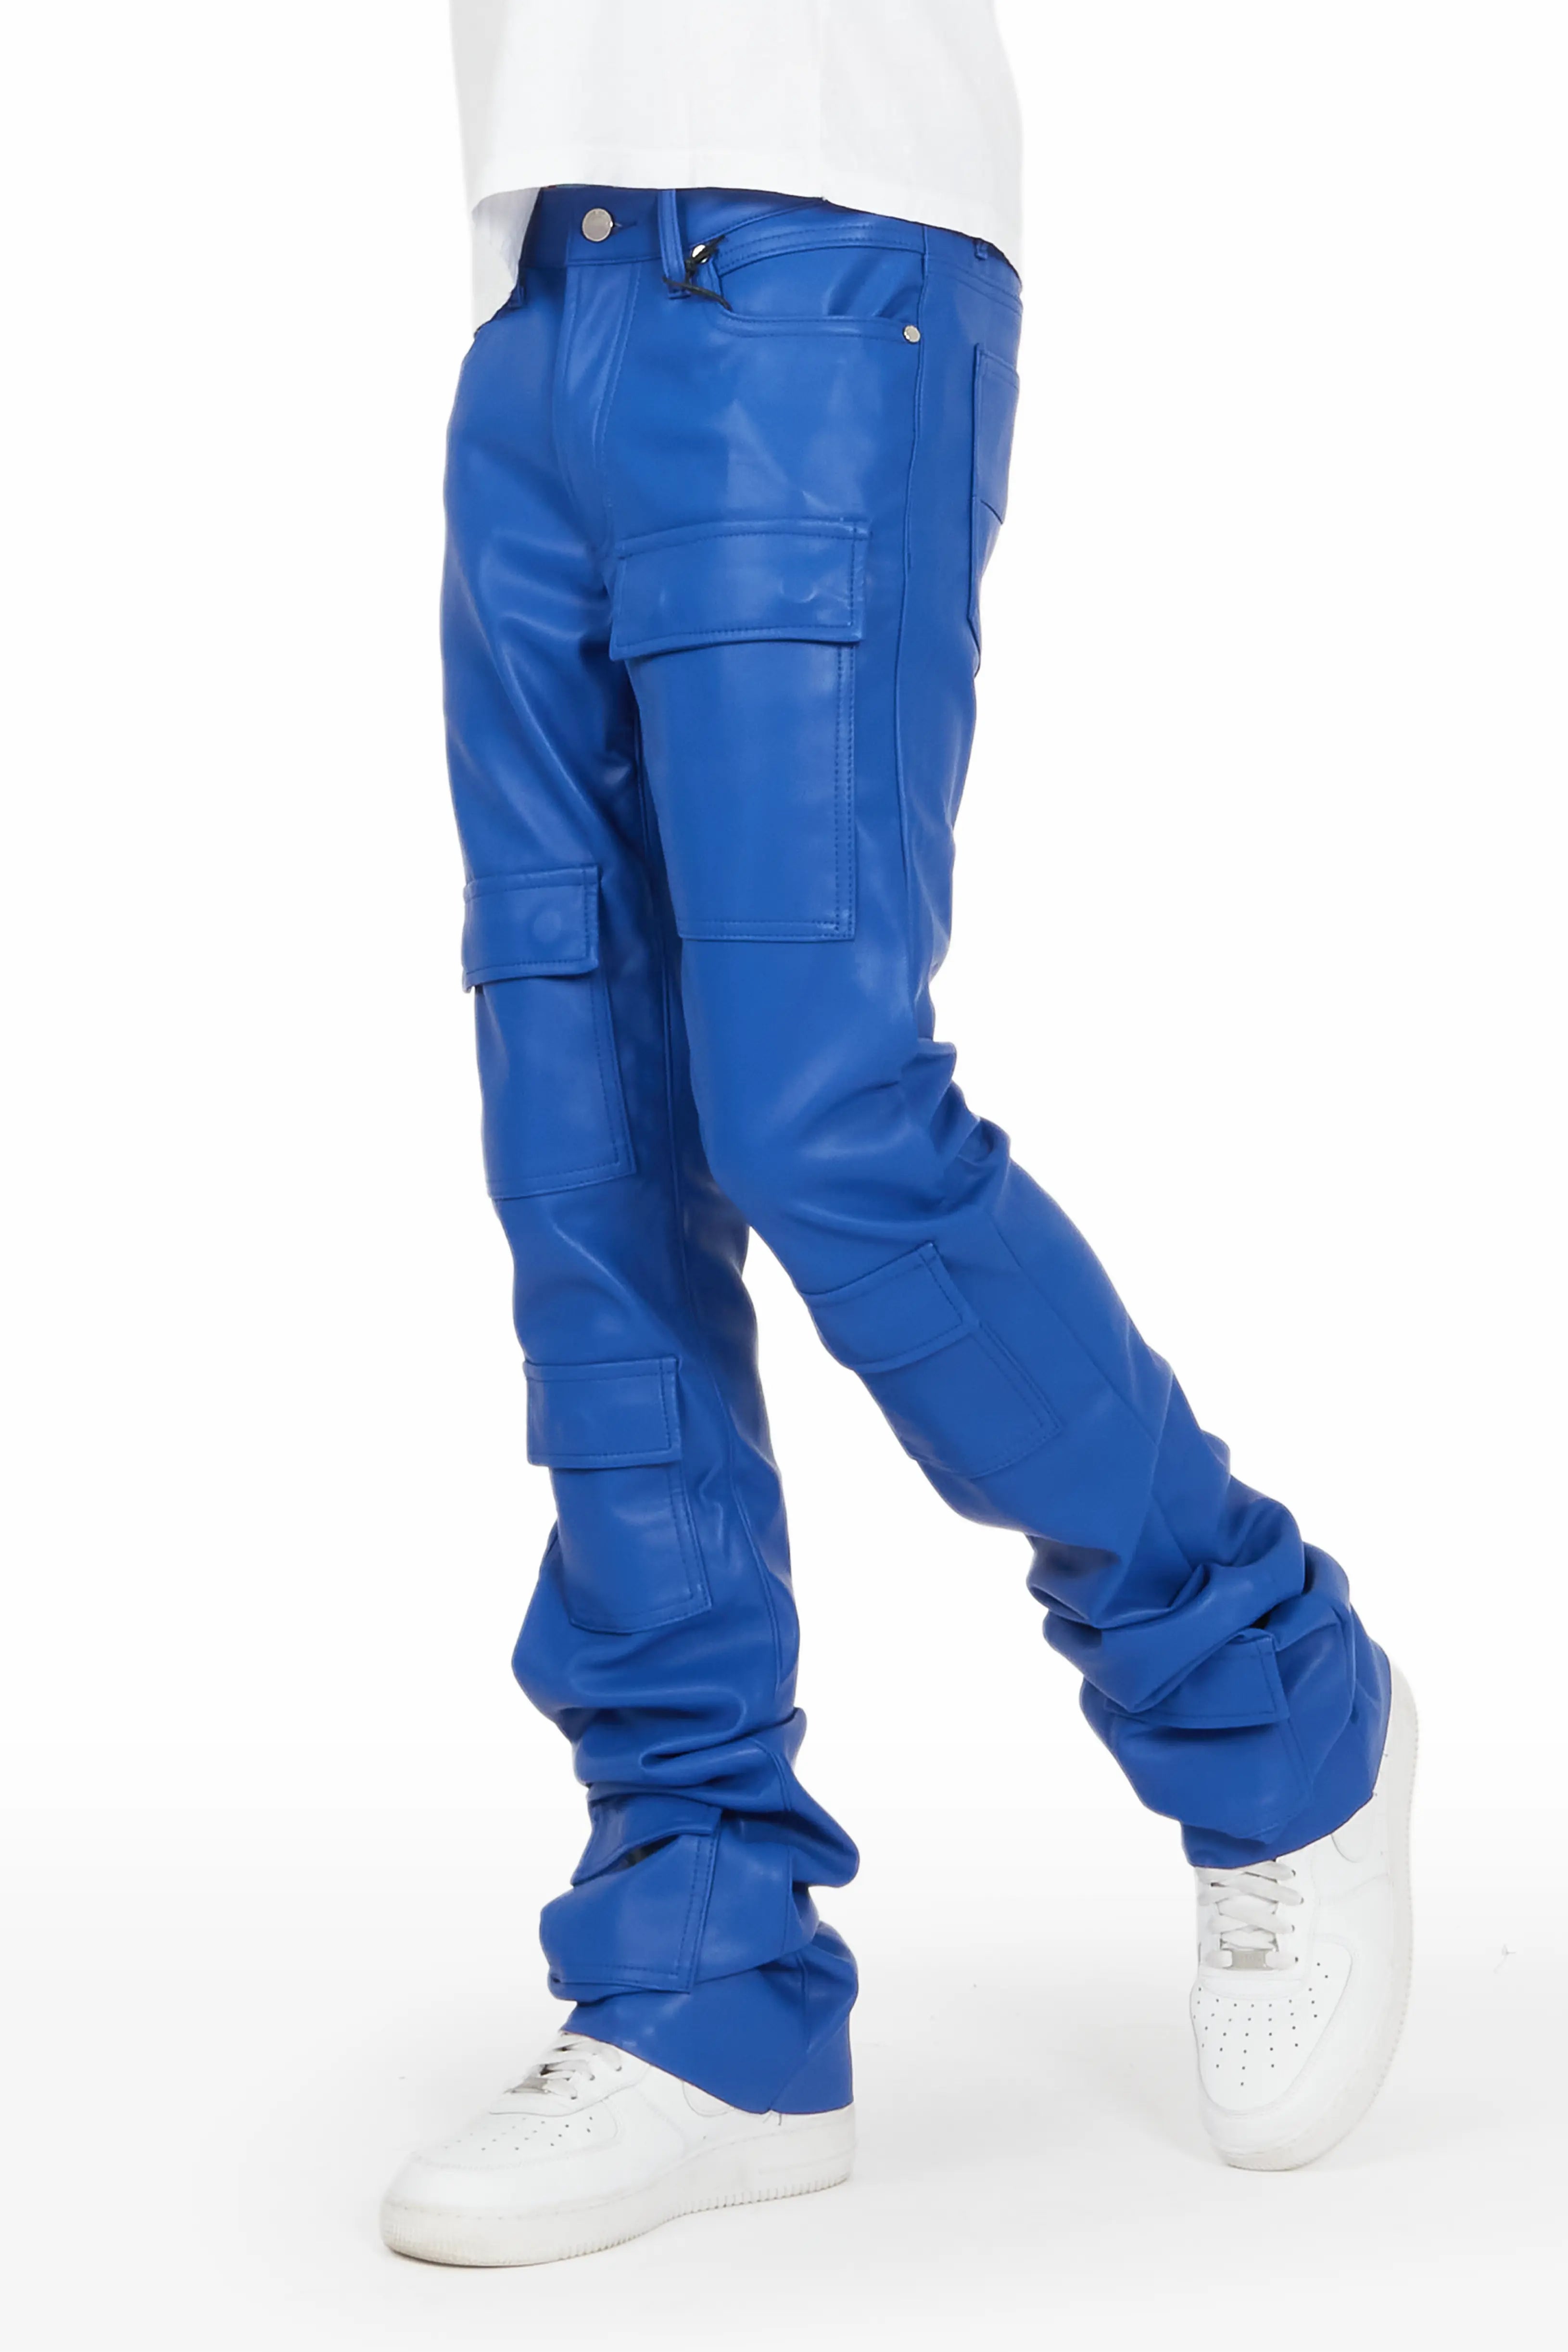 Mens Real Blue Premium Genuine Leather Pants 501 Style Causal Wear | eBay